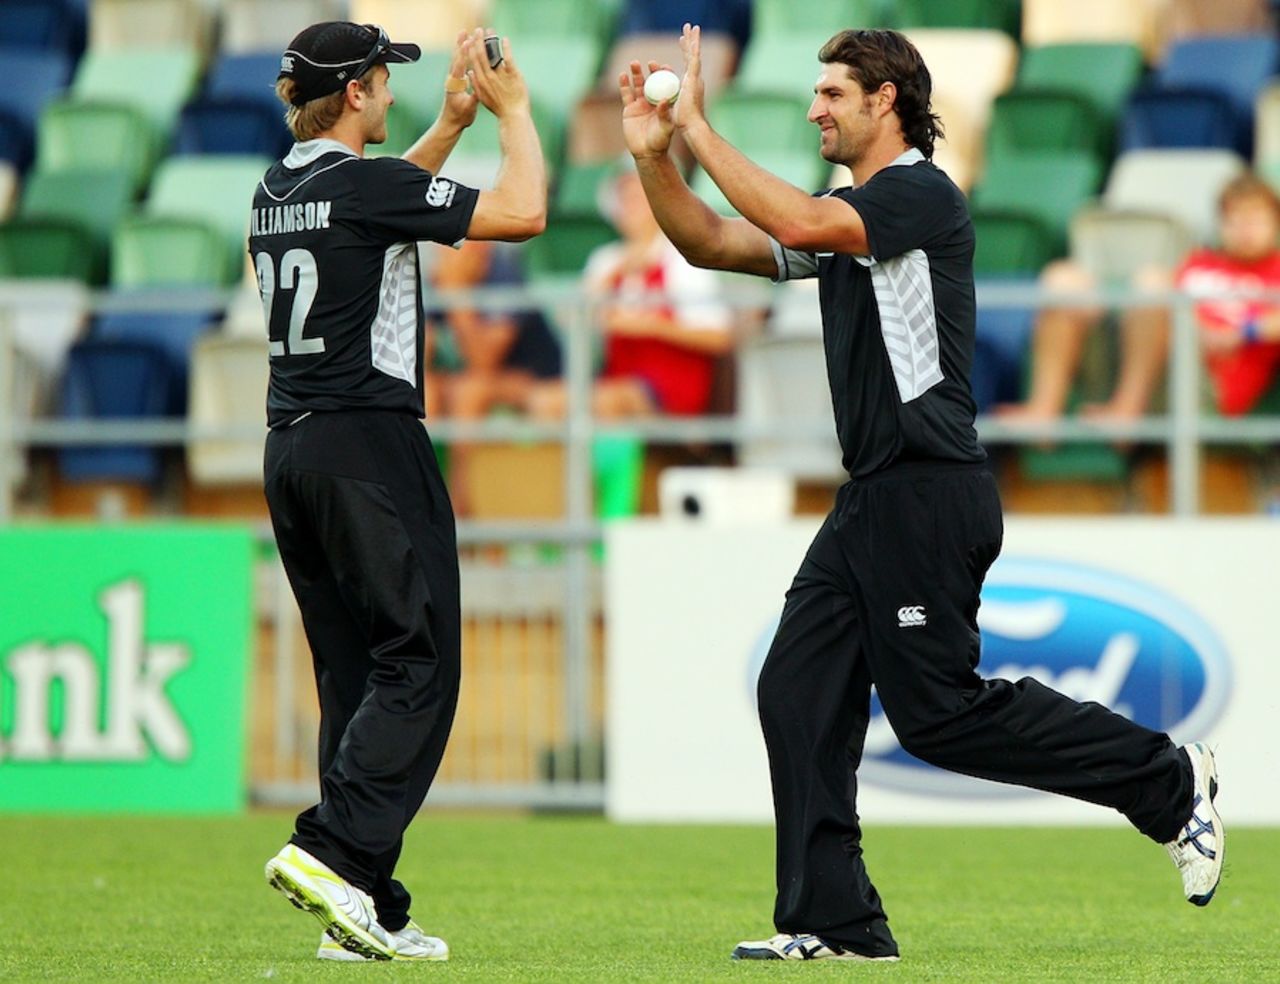 Colin de Grandhomme and Kane Williamson celebrate a wicket, New Zealand v Zimbabwe, 3rd ODI, Napier, February 9, 2012